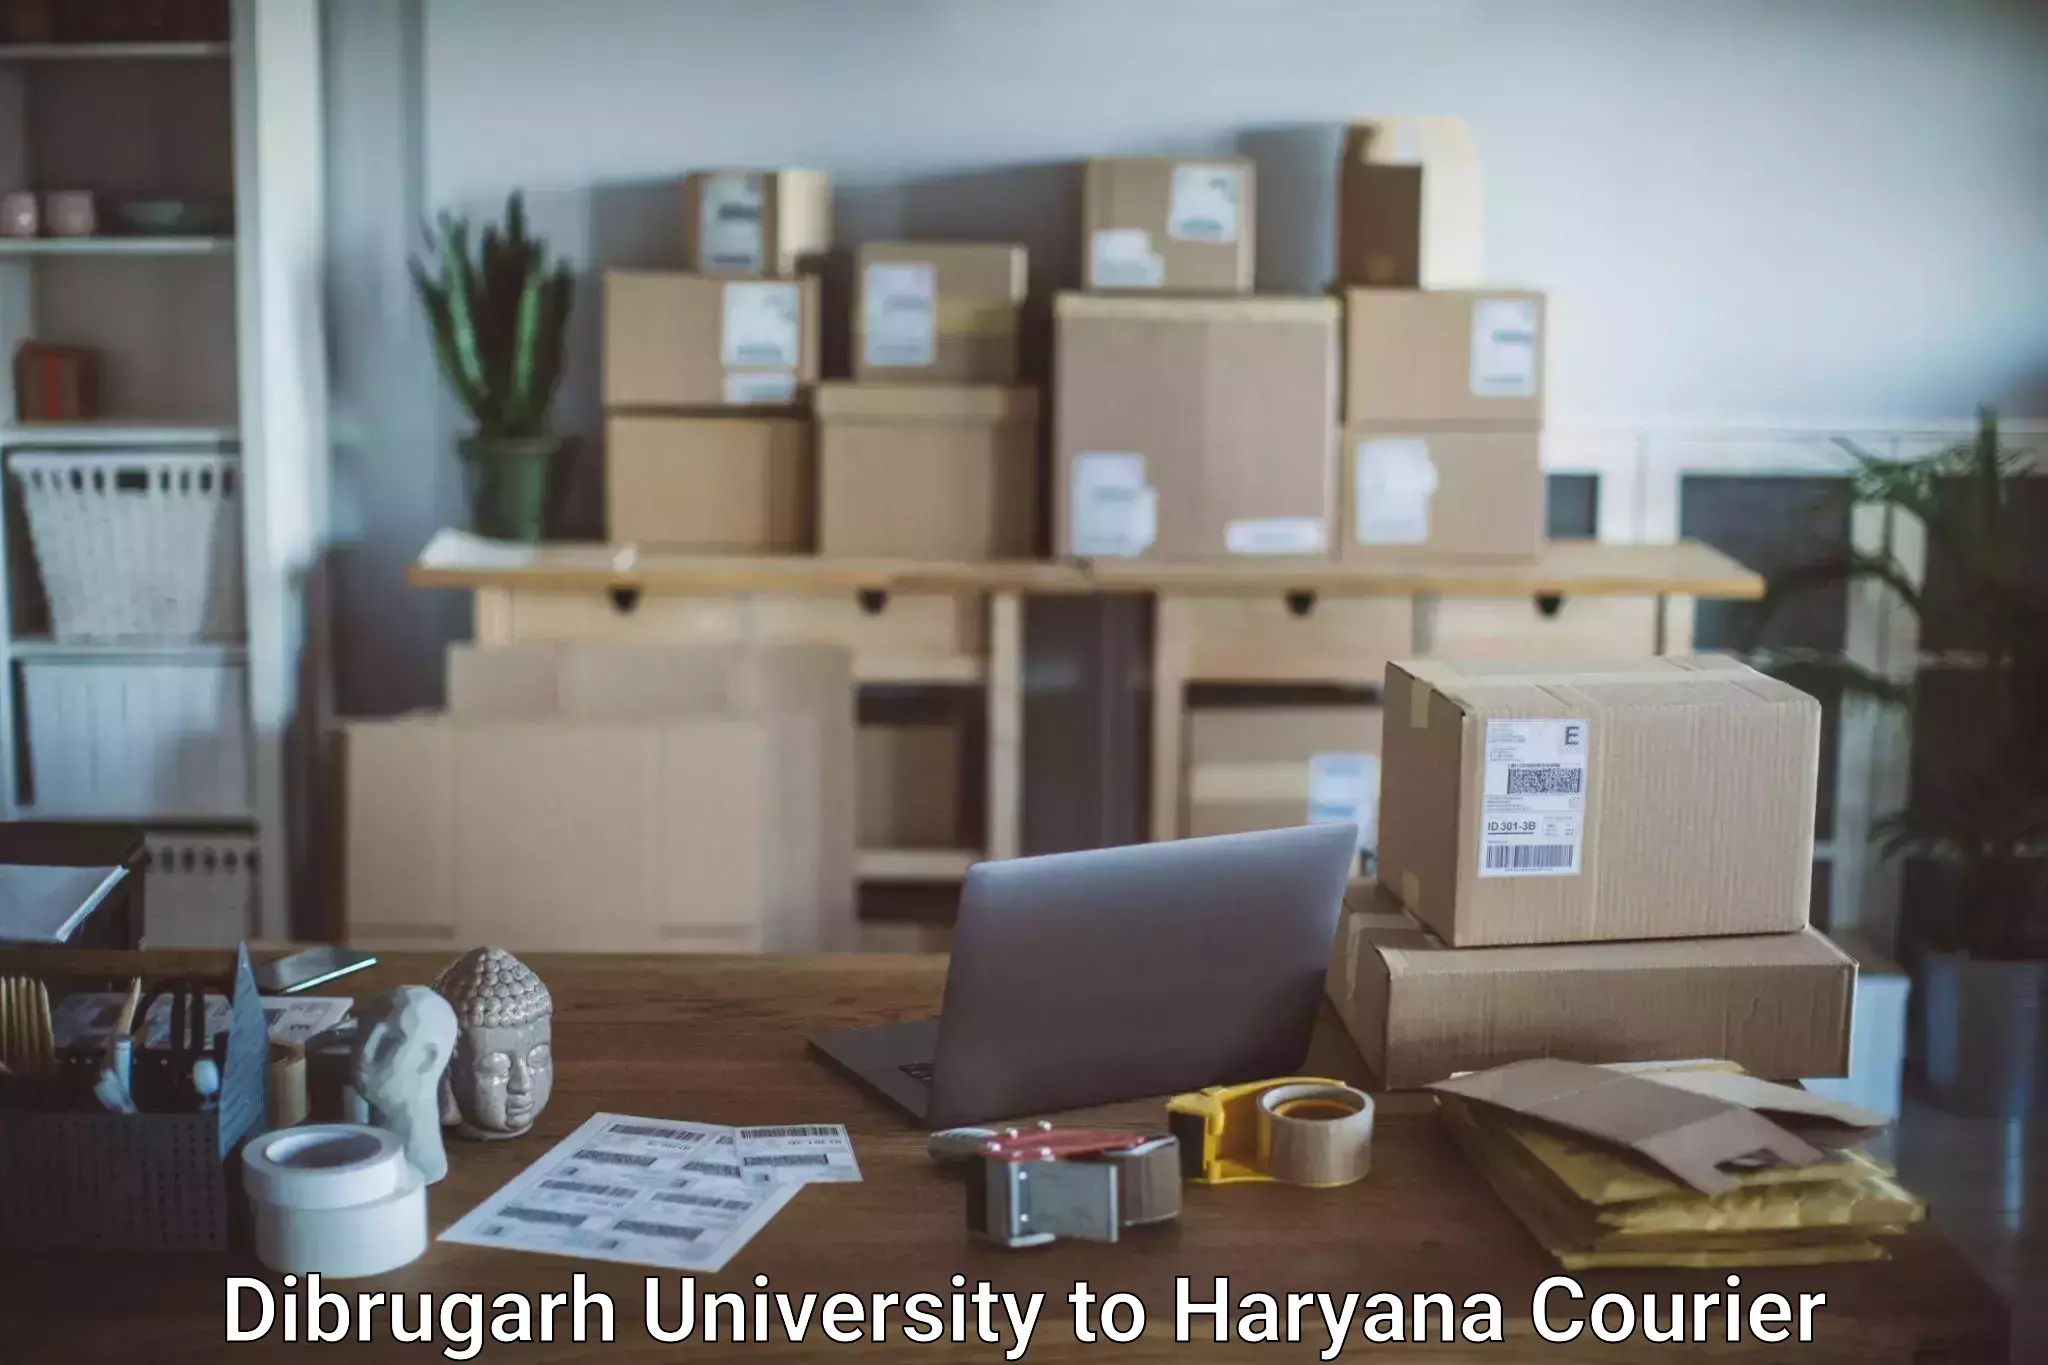 Same day luggage service Dibrugarh University to NCR Haryana